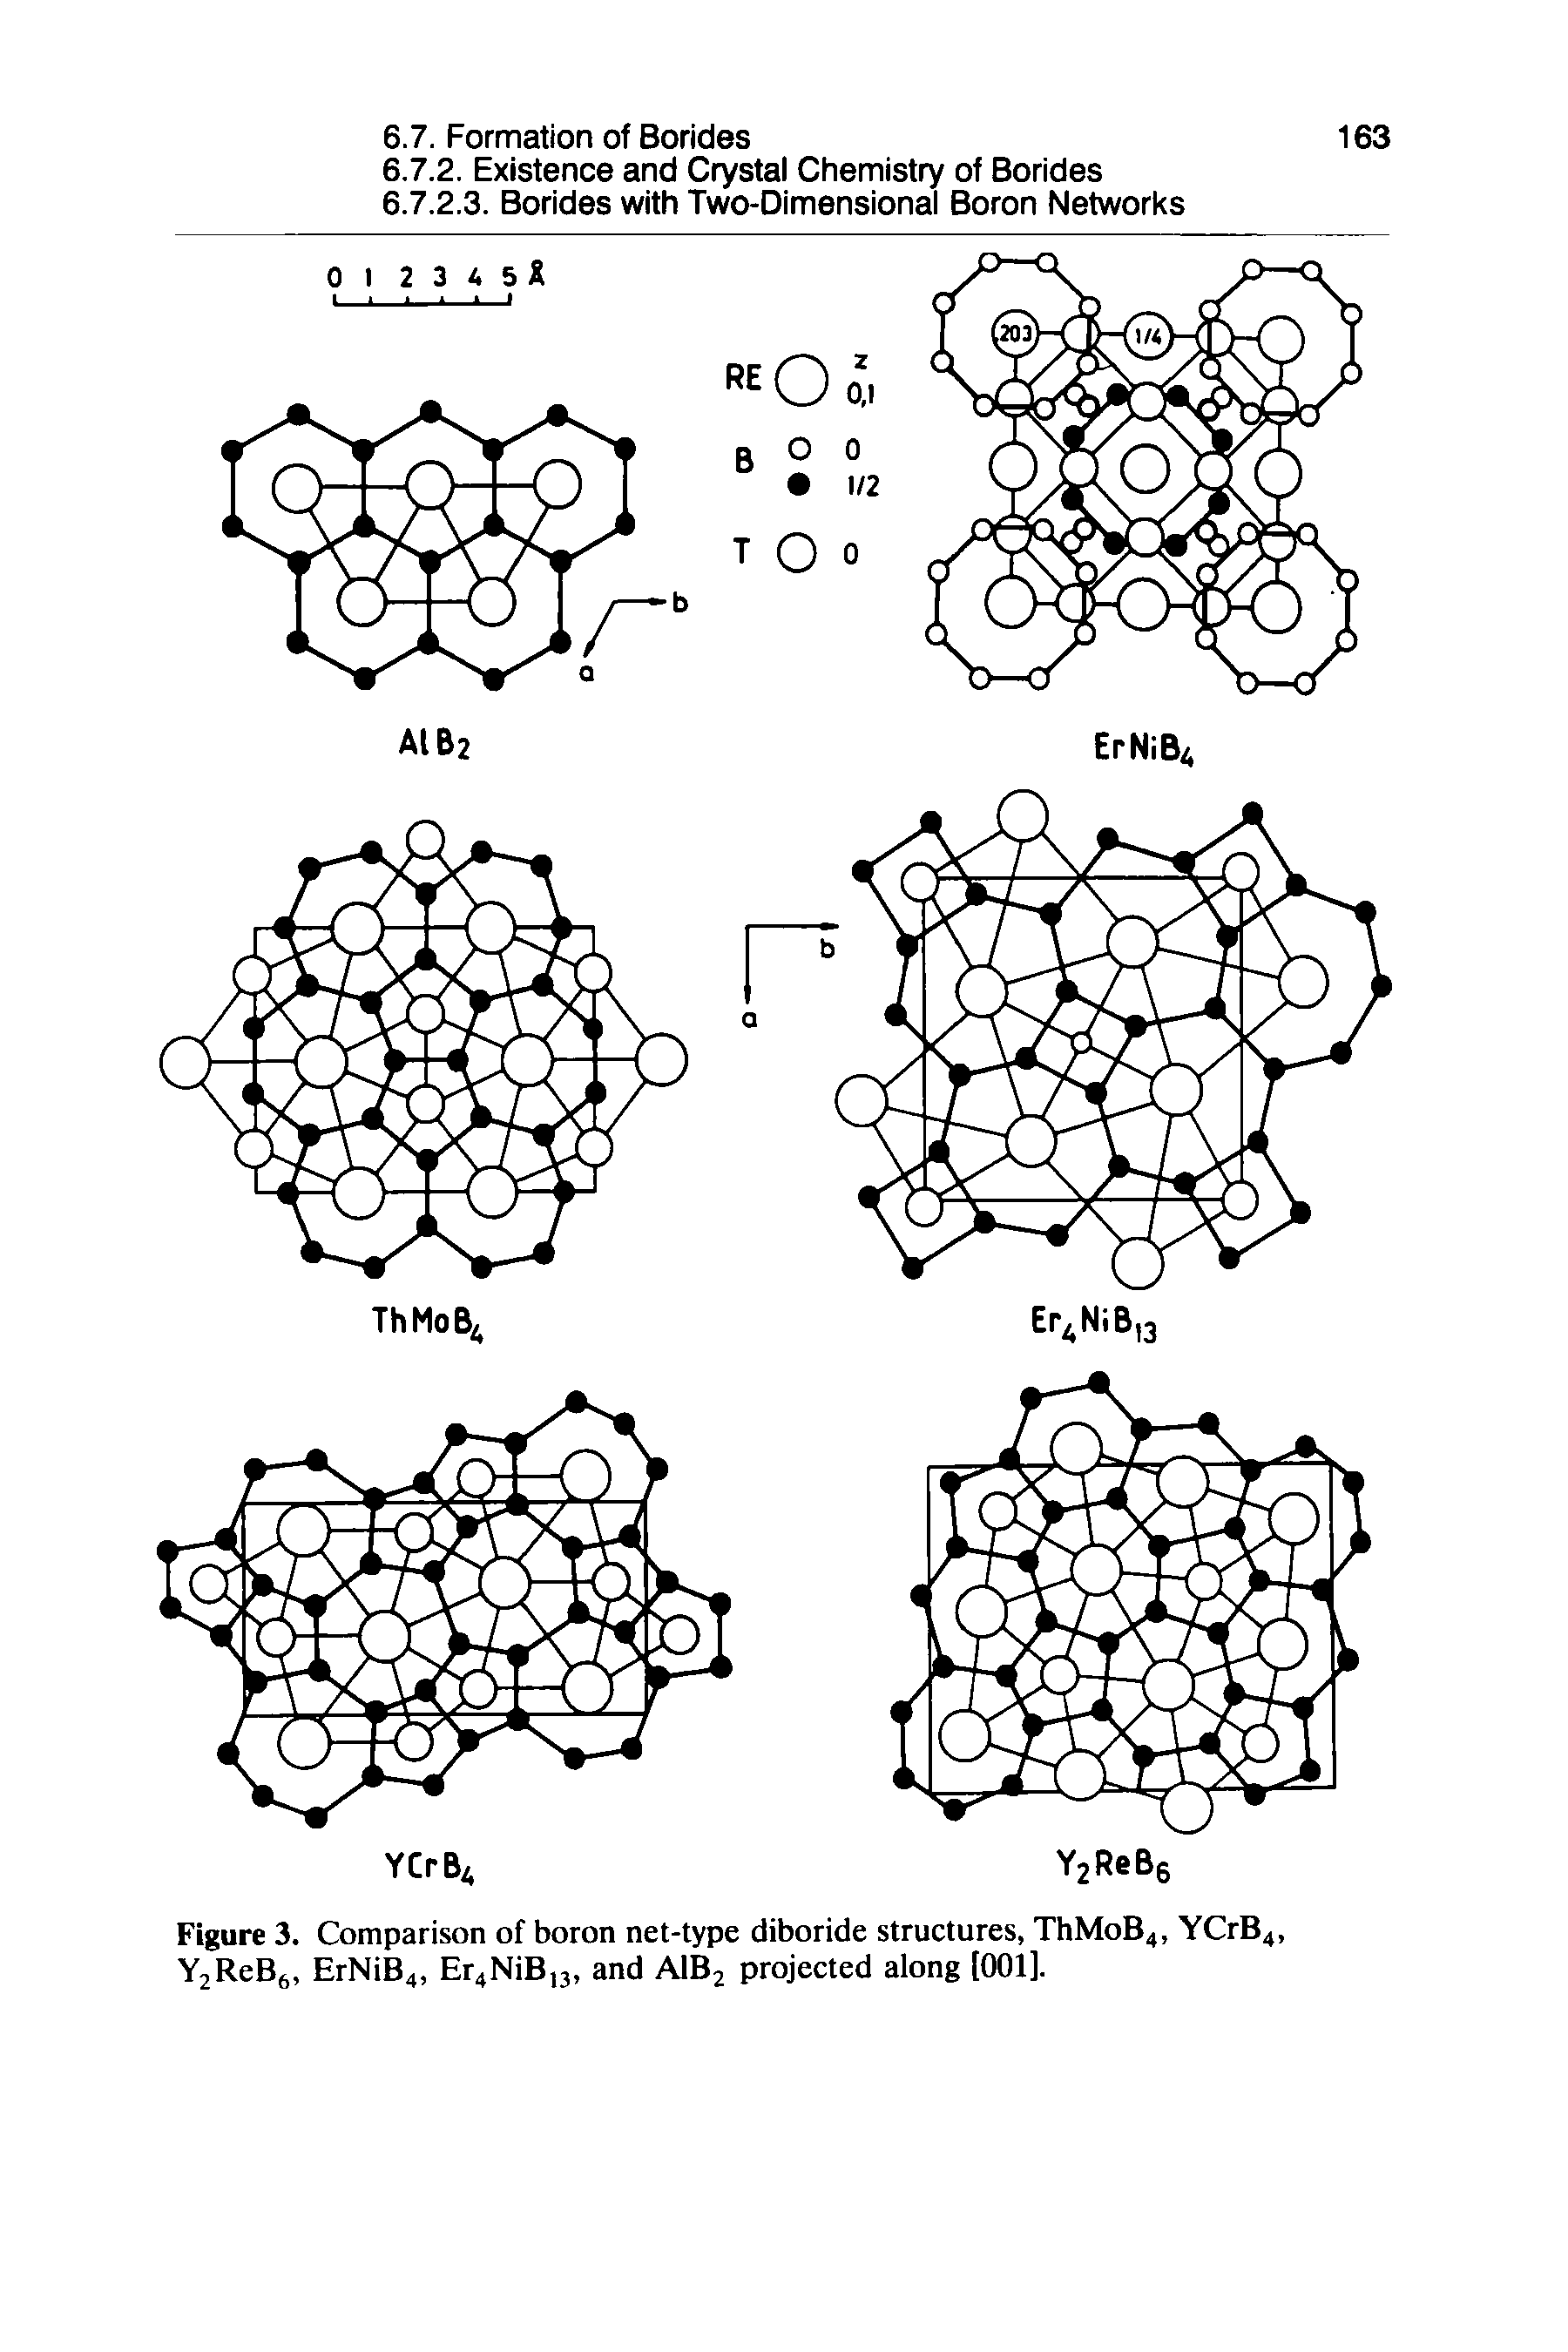 Figure 3. Comparison of boron net-type diboride structures, ThMoB4, YCrB4, Y2ReBg, ErNiB4, Er4NiB,3, and AIB2 projected along [001].